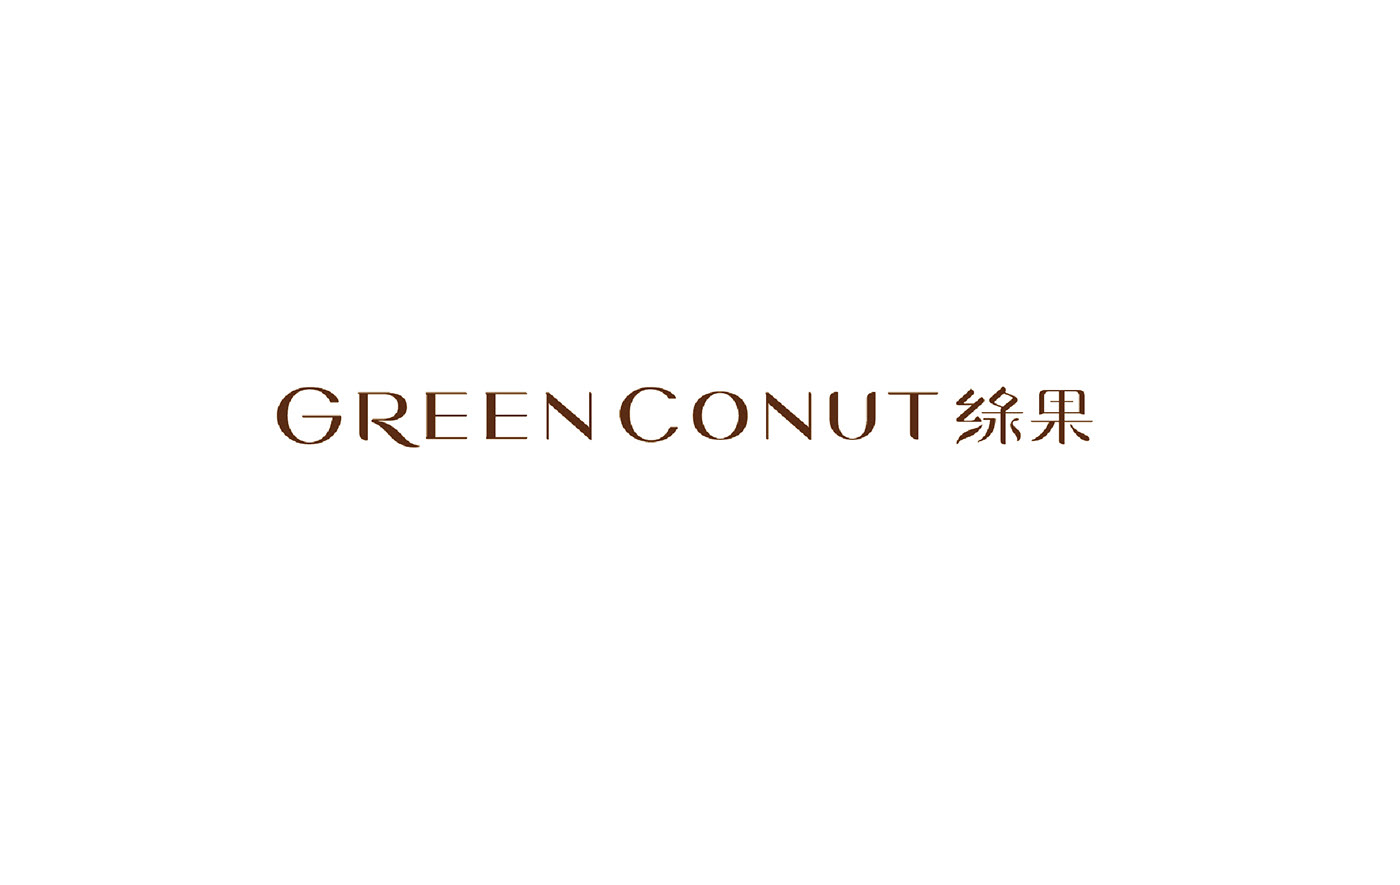 GREEN CONUT taiwan taiwan design SUMP DESIGN brand identity design packaging design